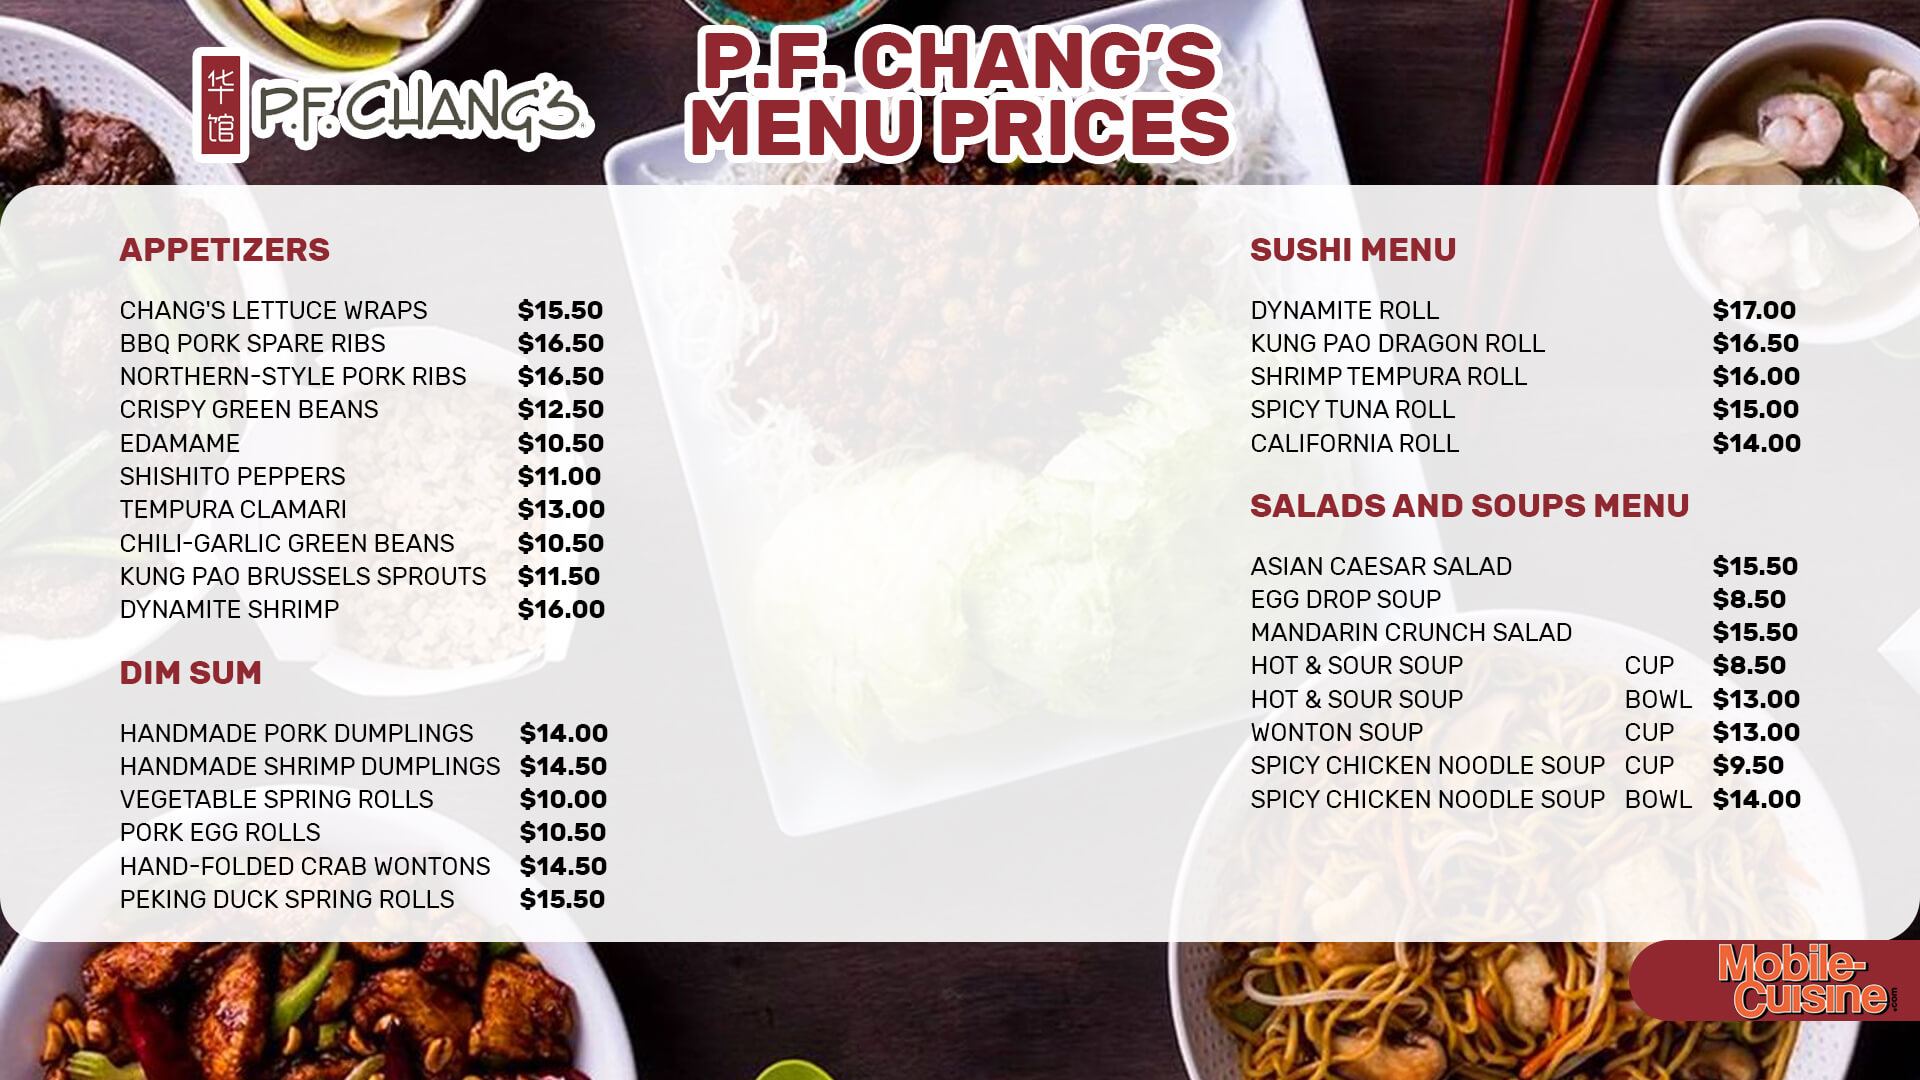 P.F. Chang’s-menu-prices